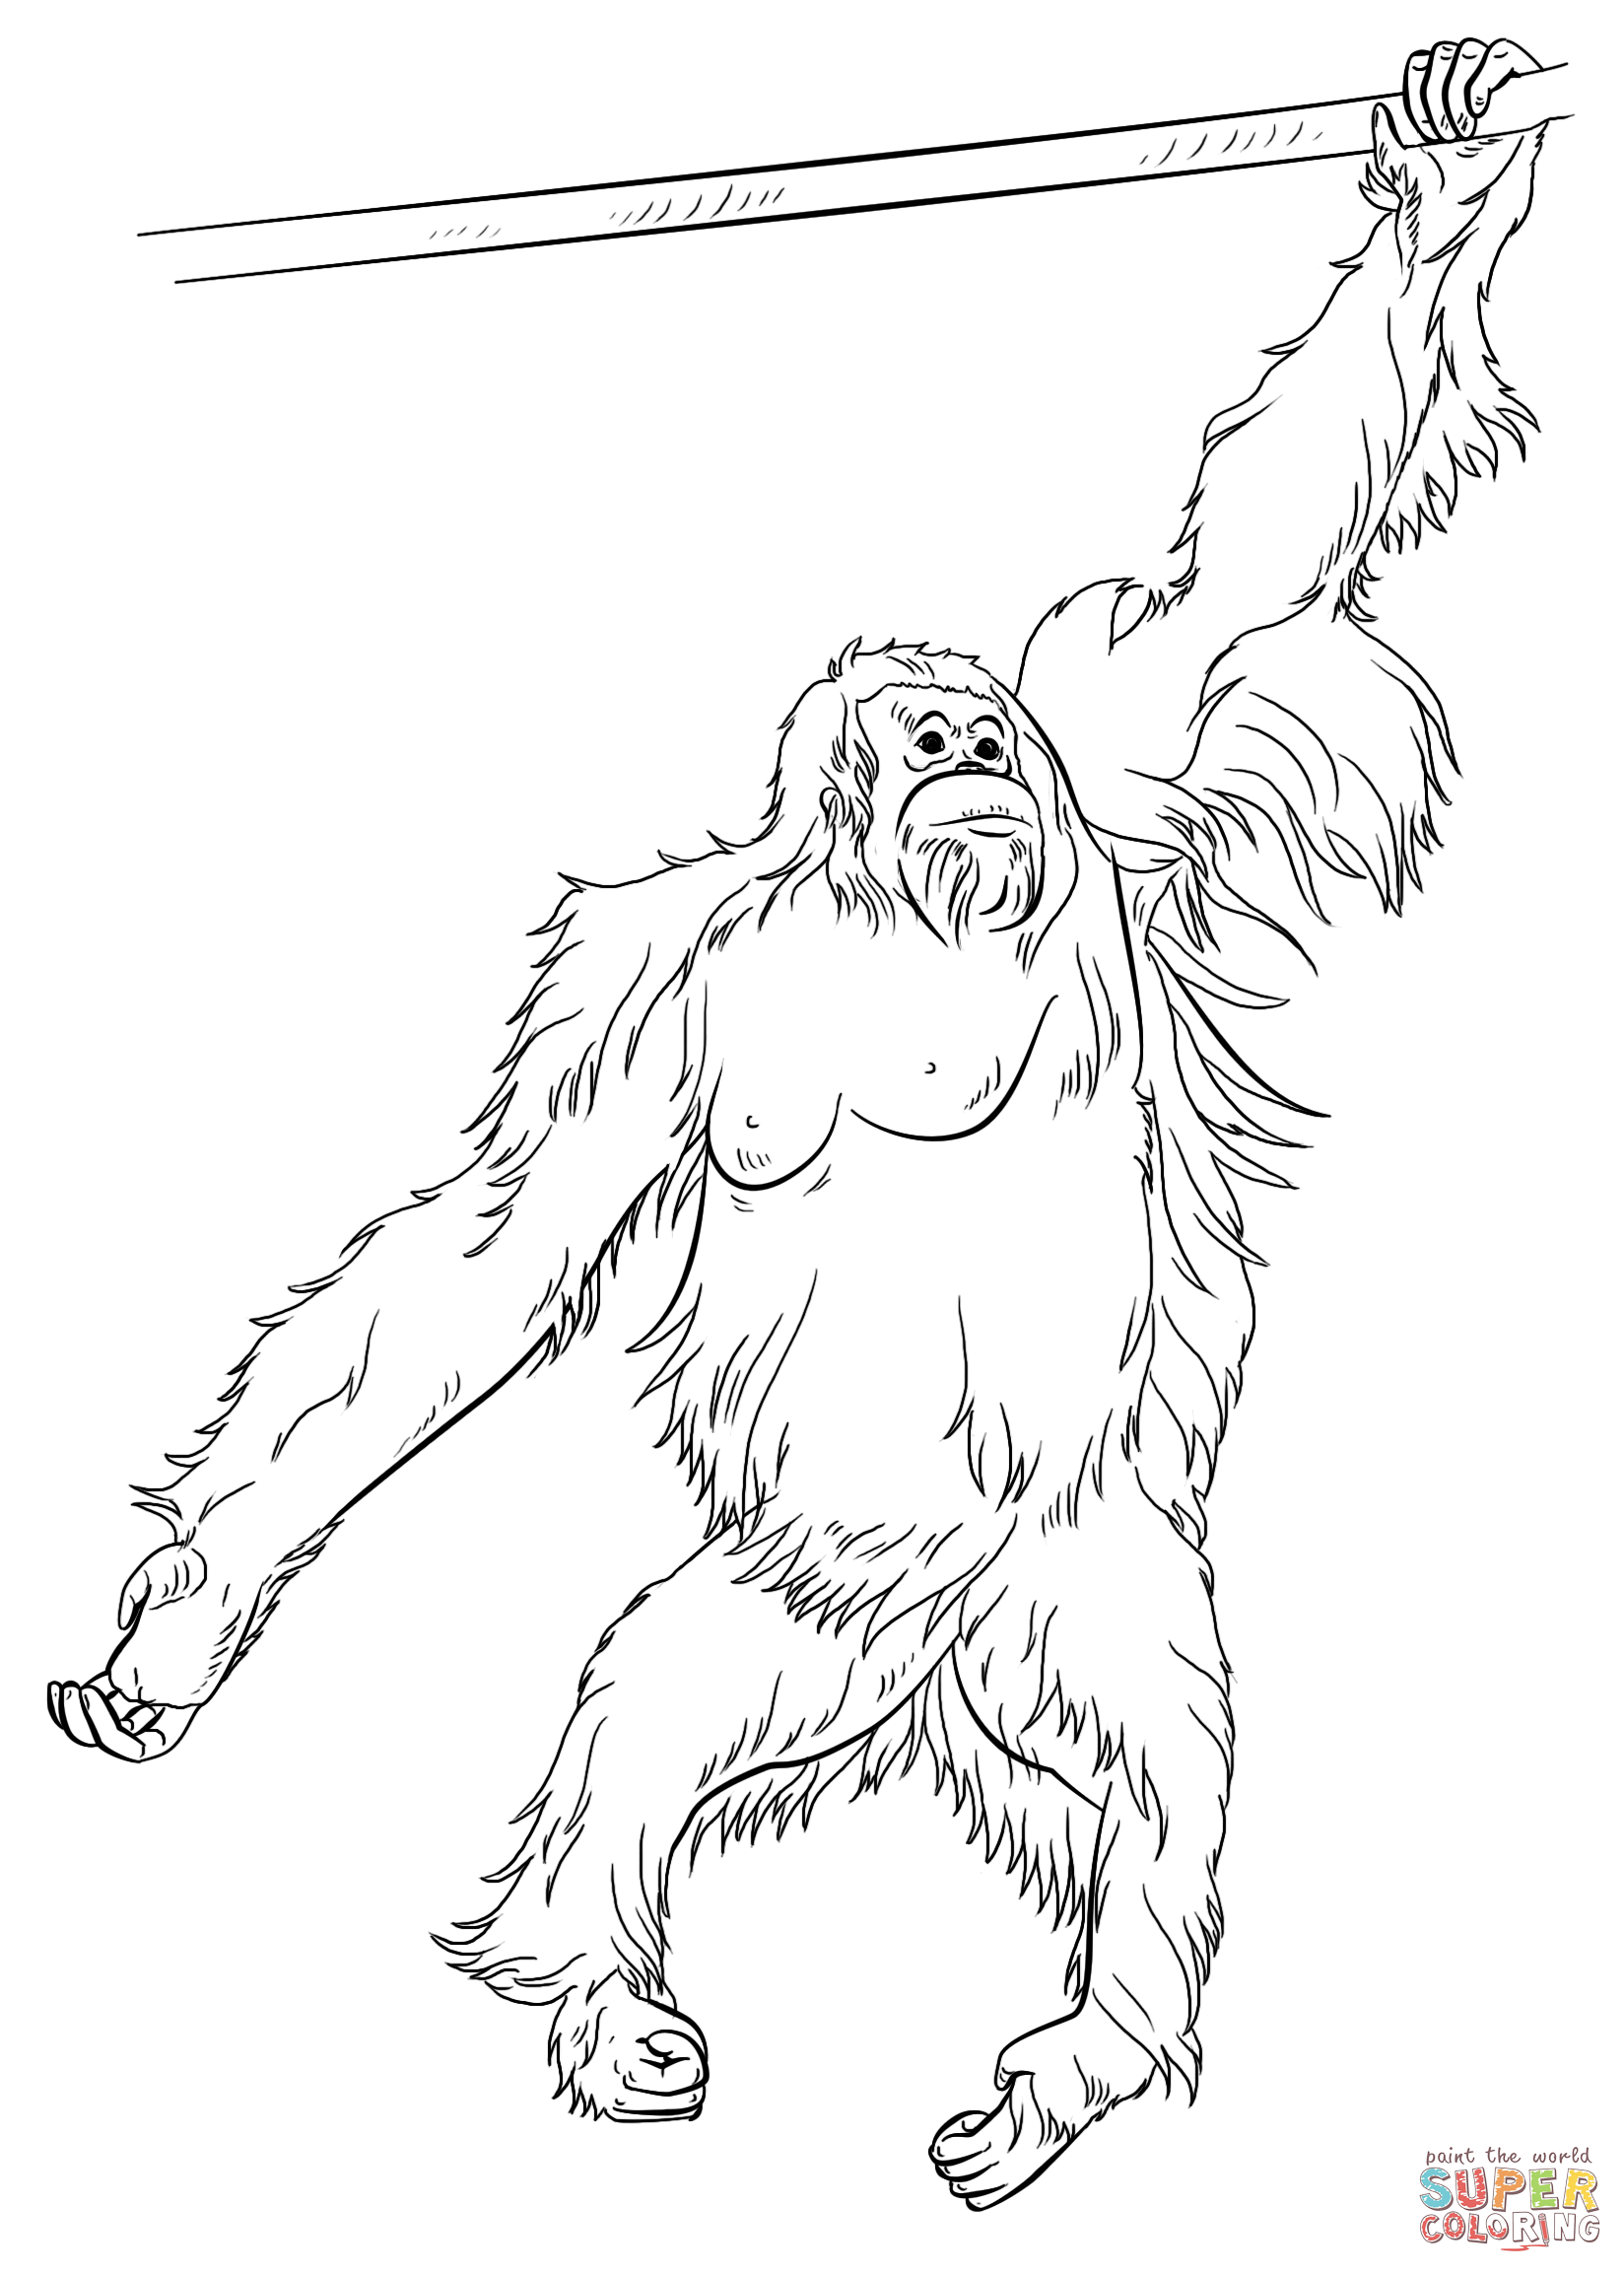 Sumatran orangutan coloring page free printable coloring pages